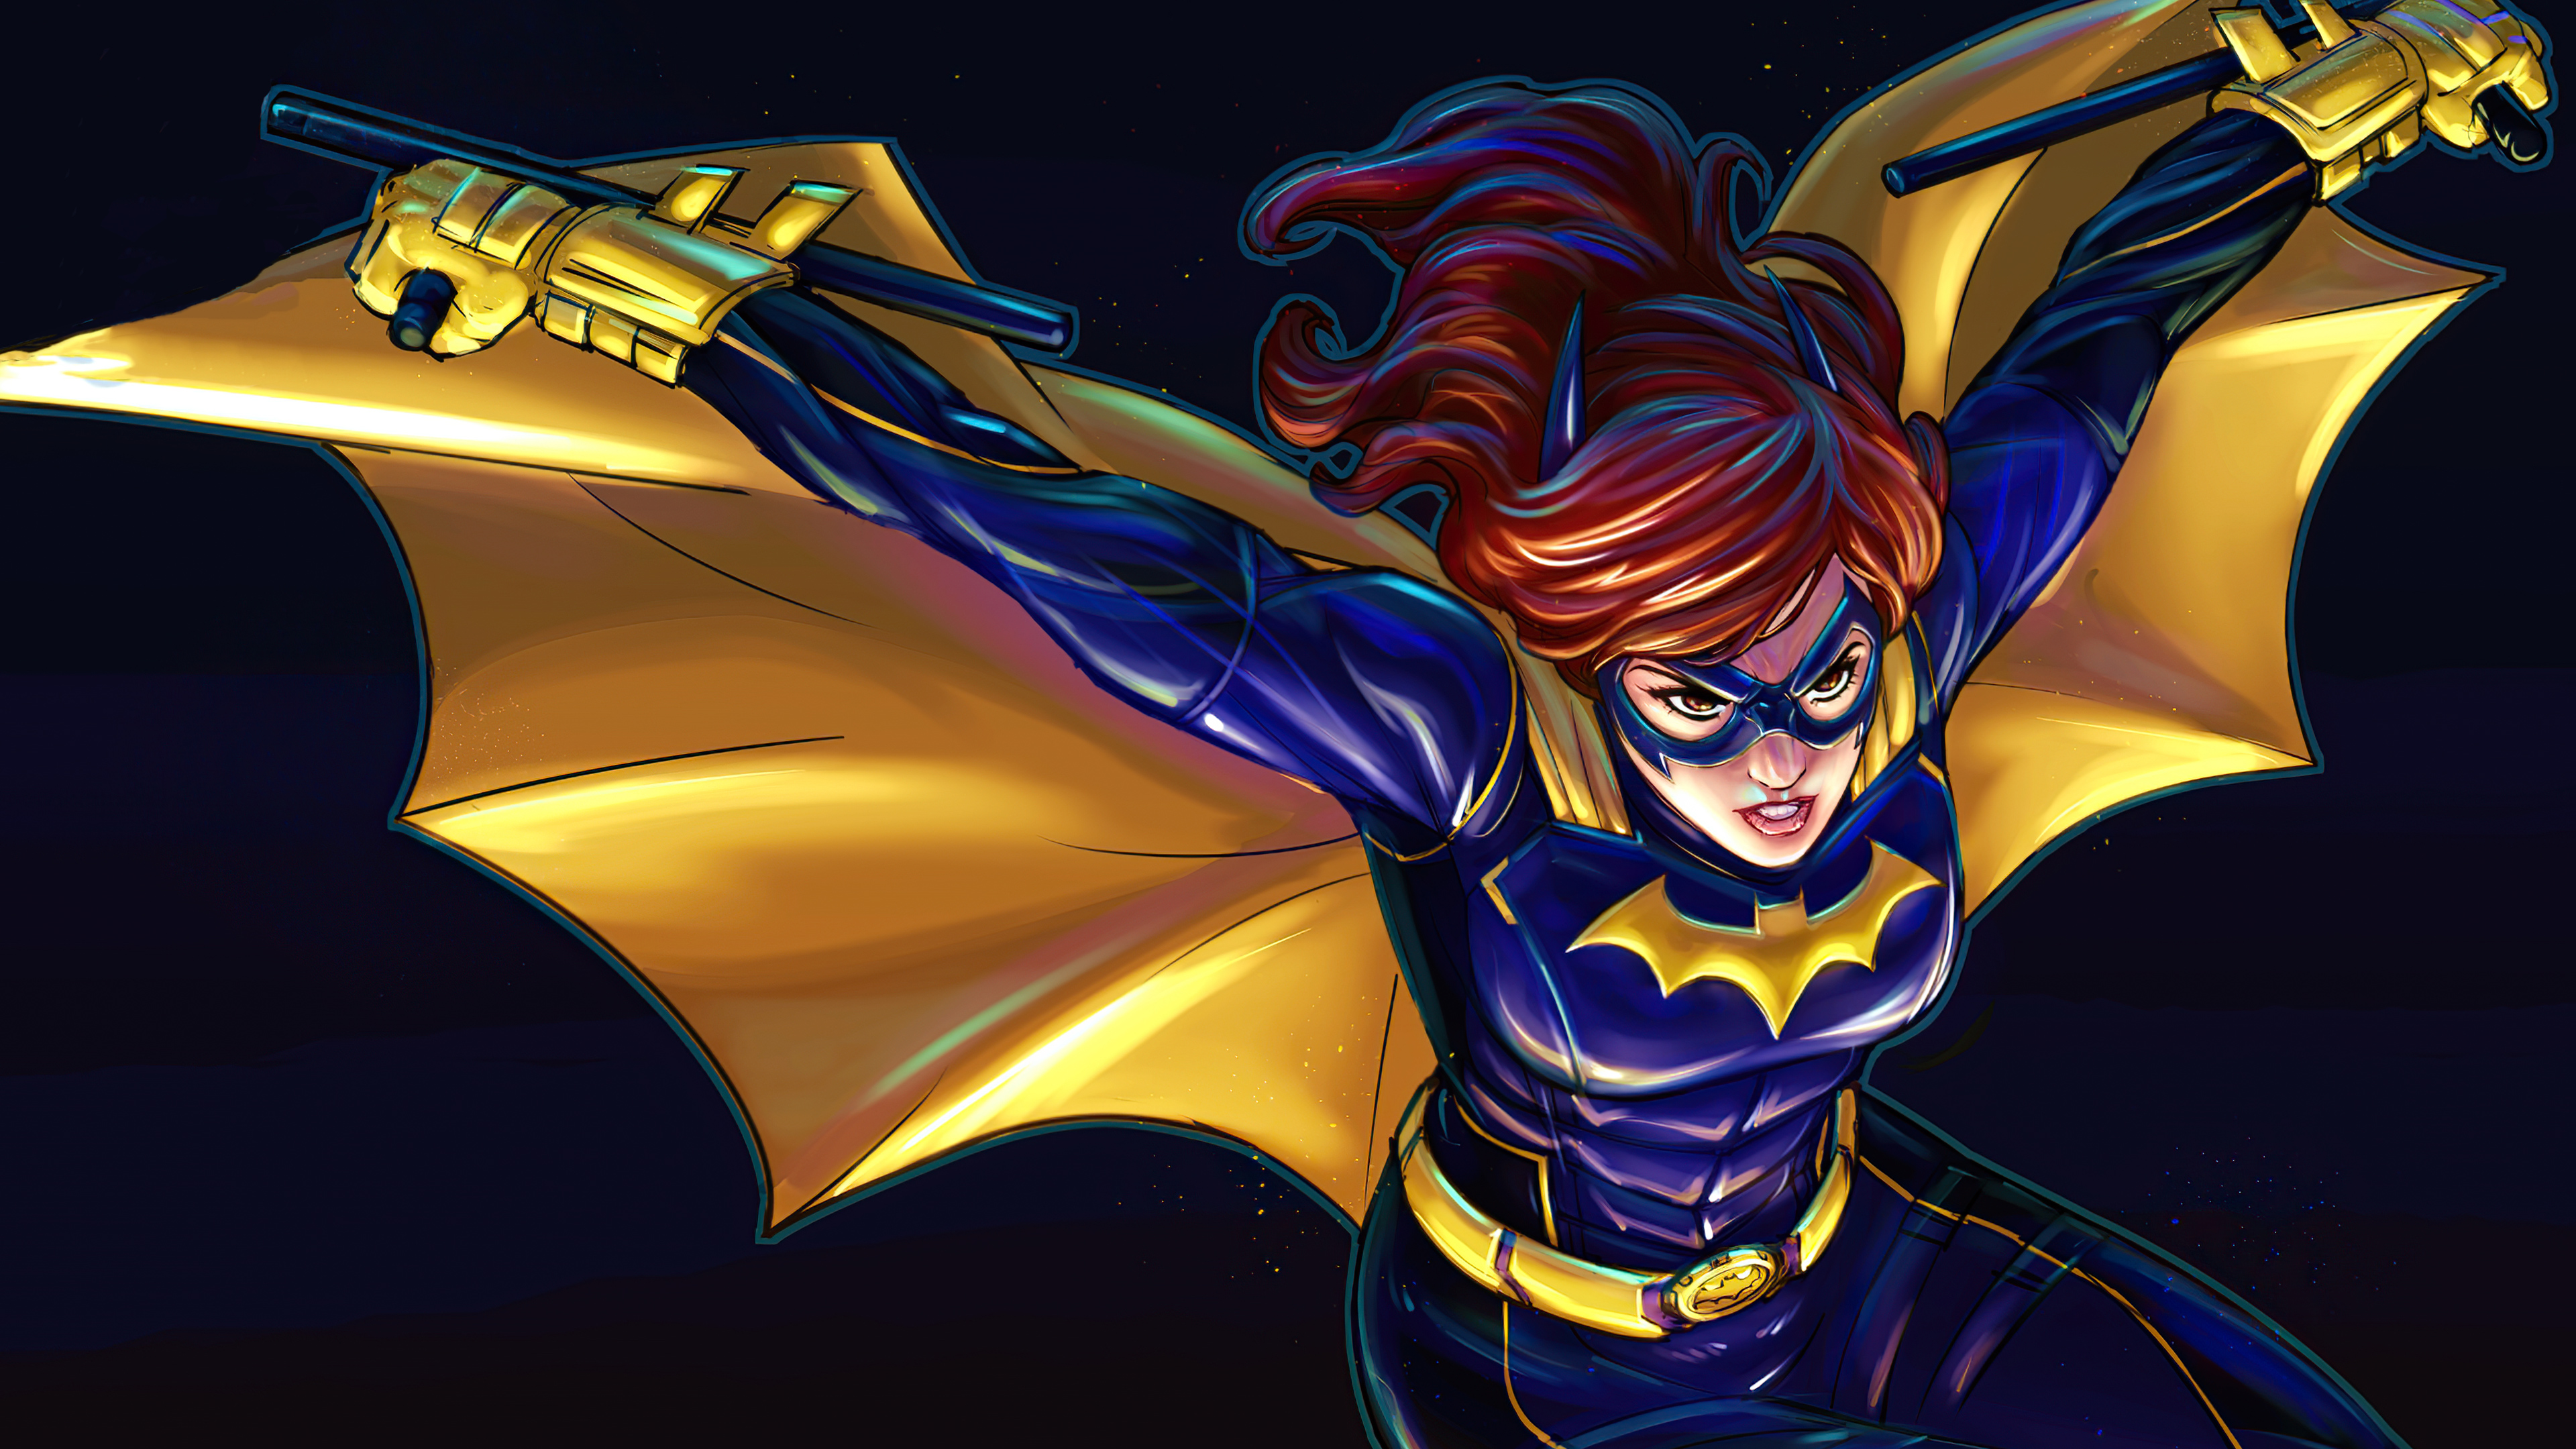 Descarga gratuita de fondo de pantalla para móvil de Historietas, The Batman, Dc Comics, Bárbara Gordon, Batgirl.